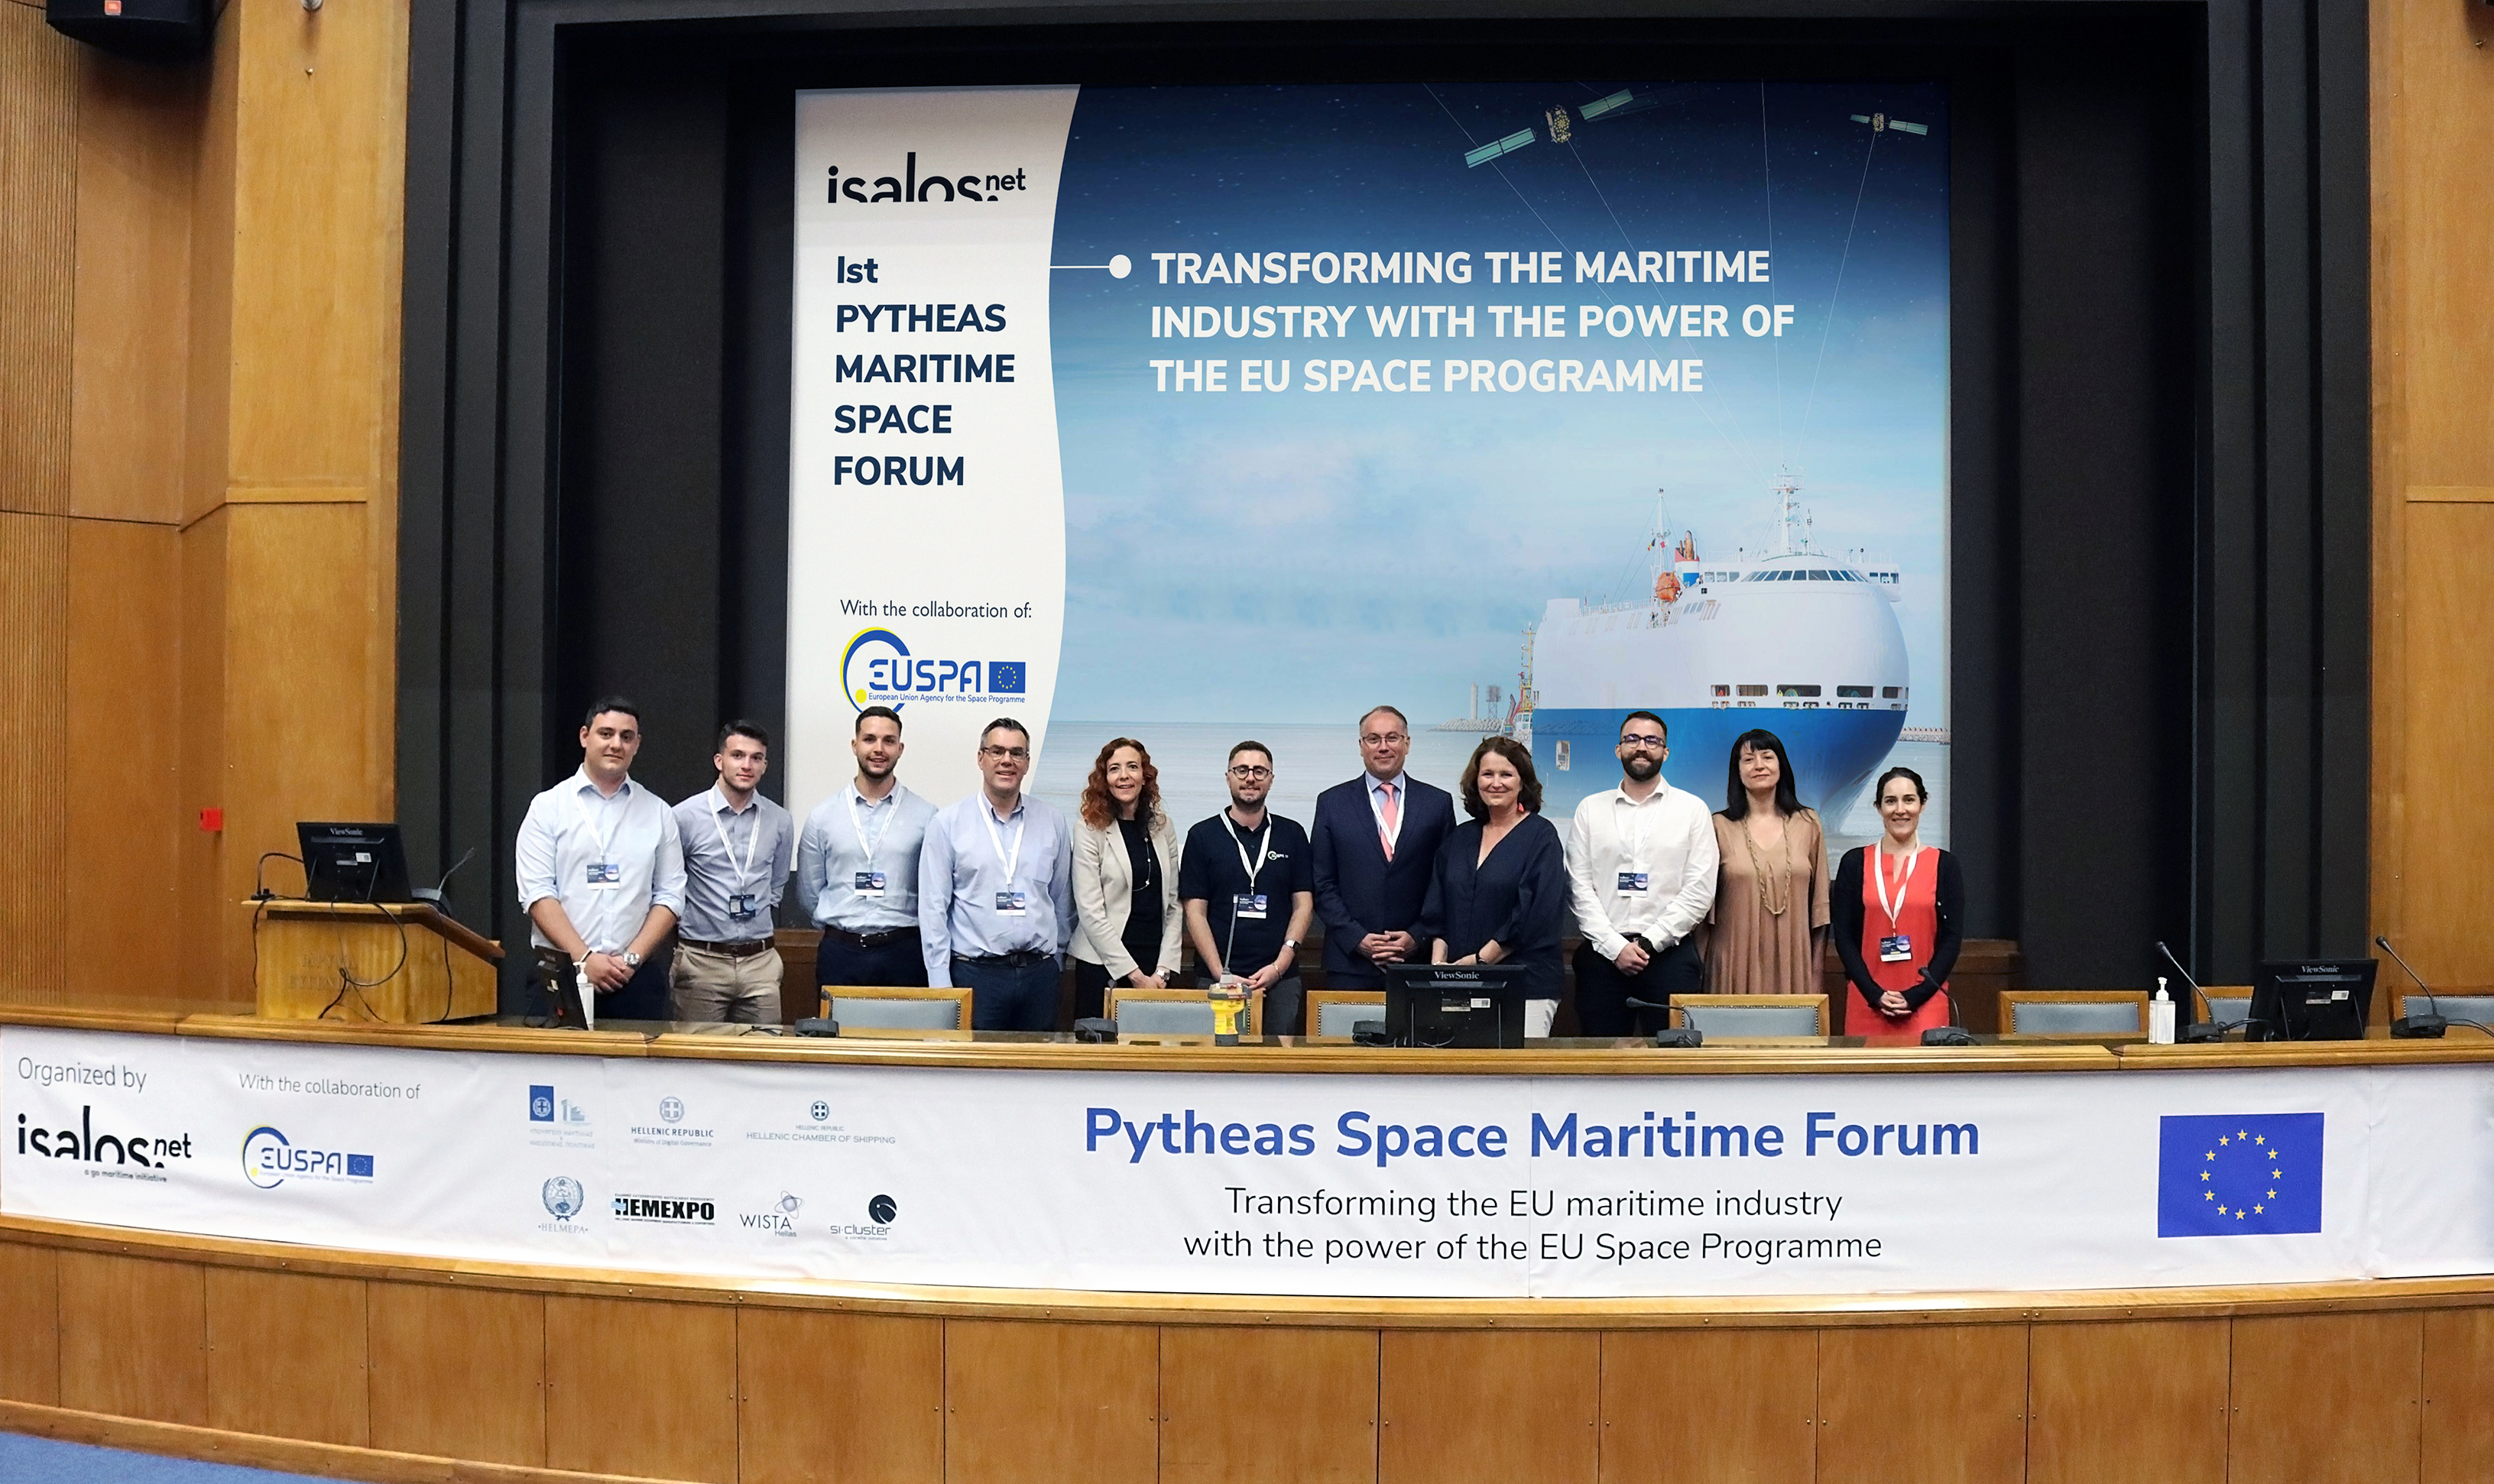 1st Pytheas Maritime Space Forum: Η διοργανωτική ομάδα